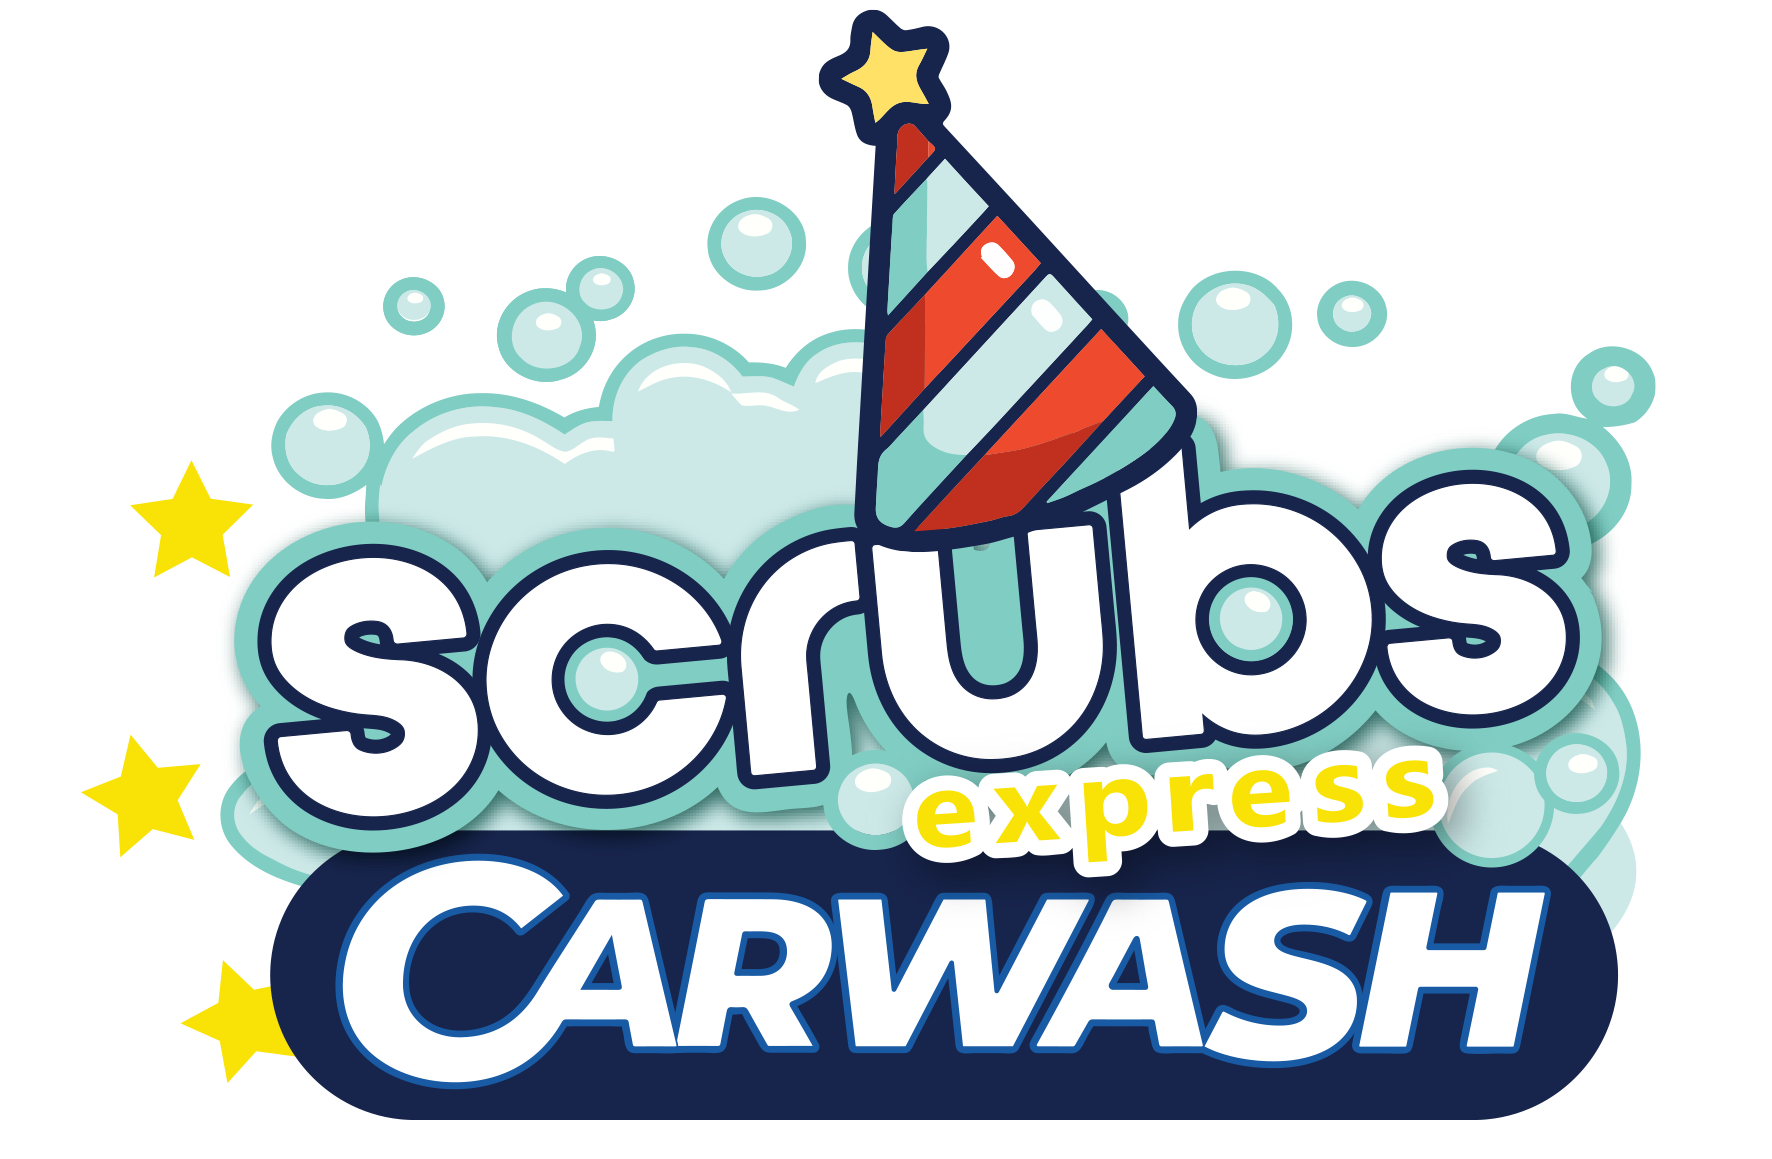 scrubs carwash express wash in Marietta Georgia